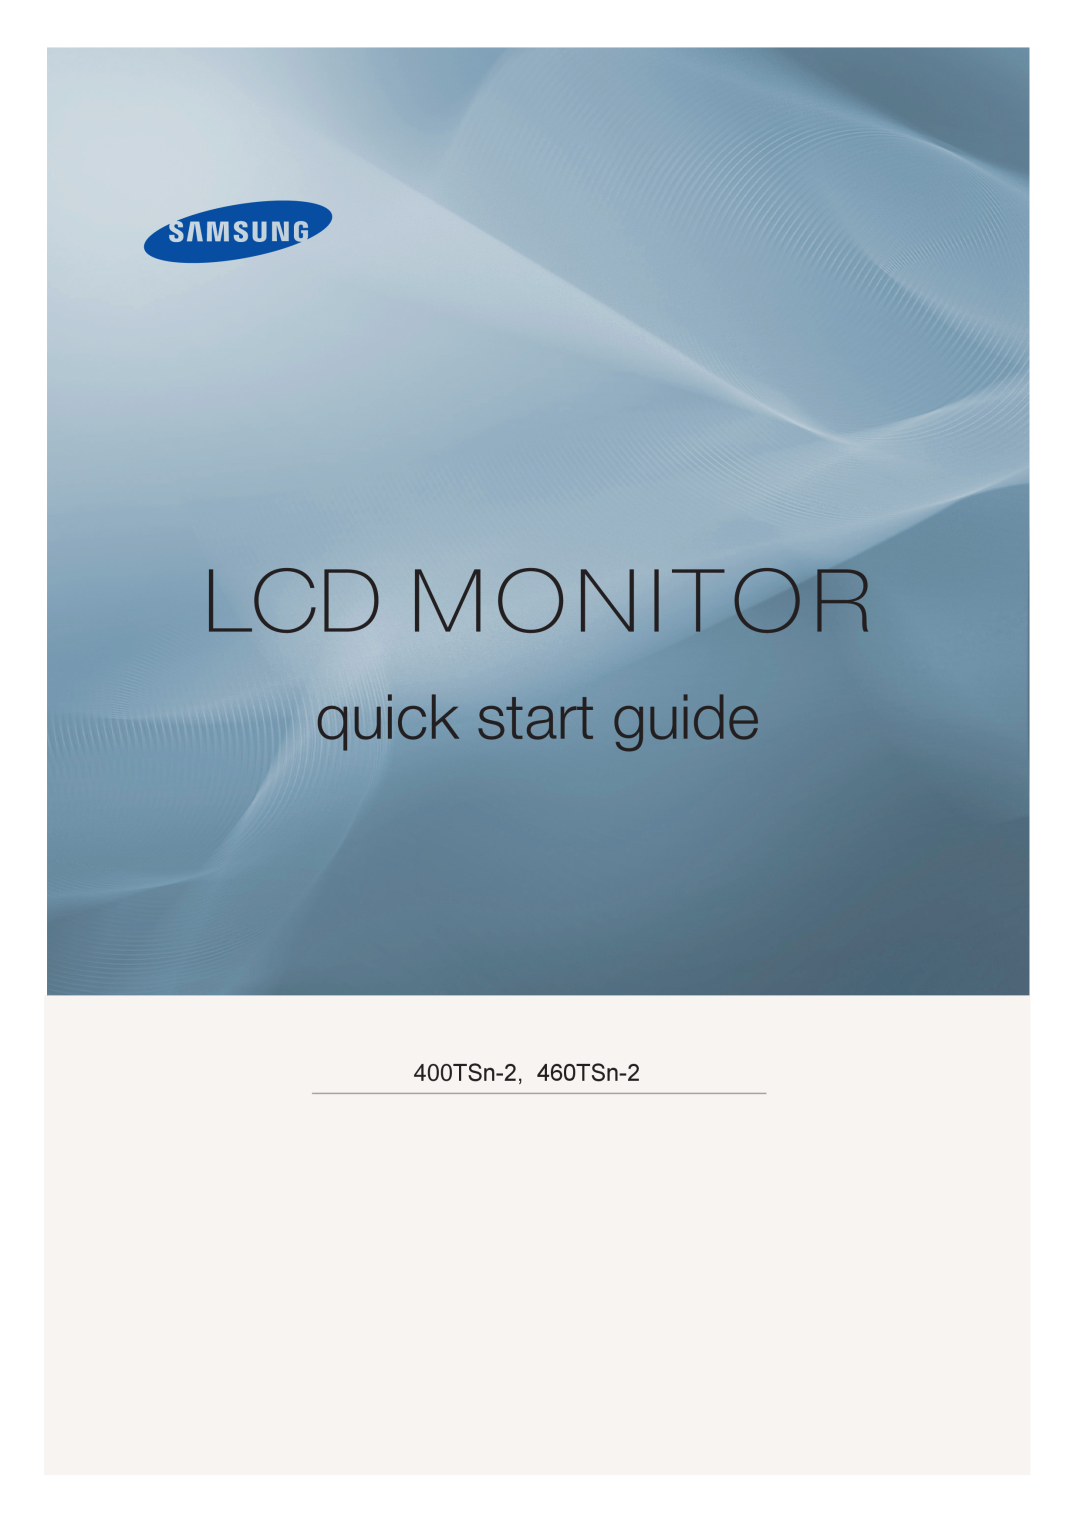 Samsung 460TSN-2, 400TSN-2 quick start Lcd Monitor, quick start guide, 400TSn-2, 460TSn-2 